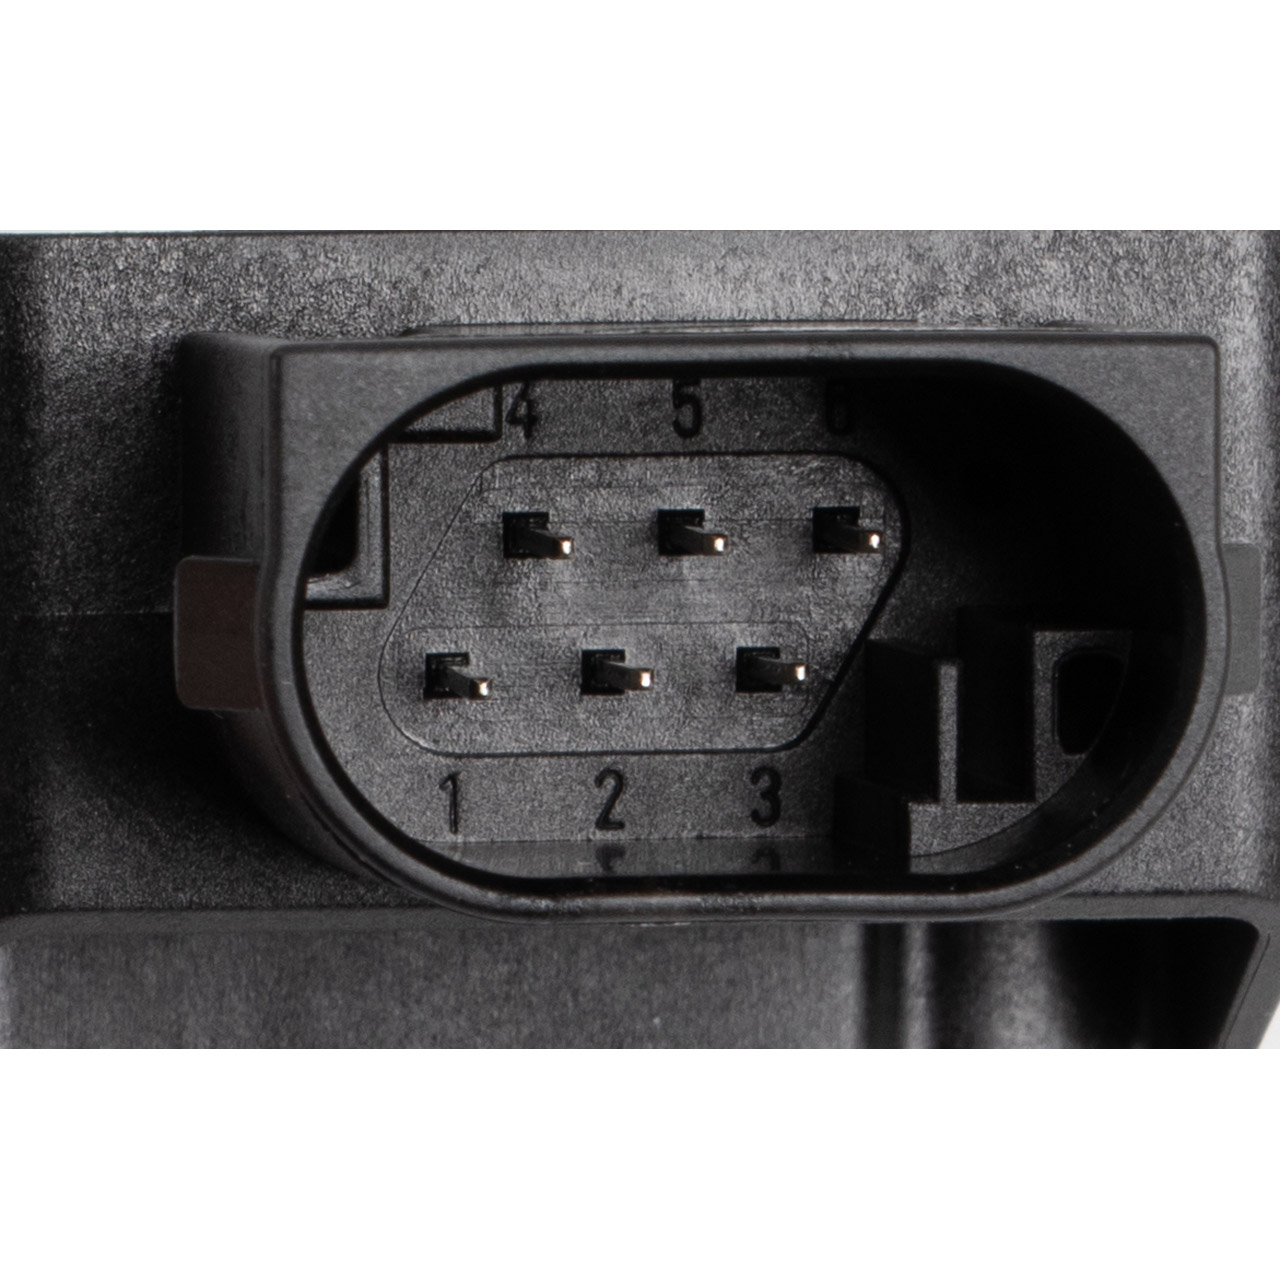 Sensor Leuchtweitenregulierung XENON für BMW F20 F22/23 F30/31 F32-36 F10 F01 37146870000